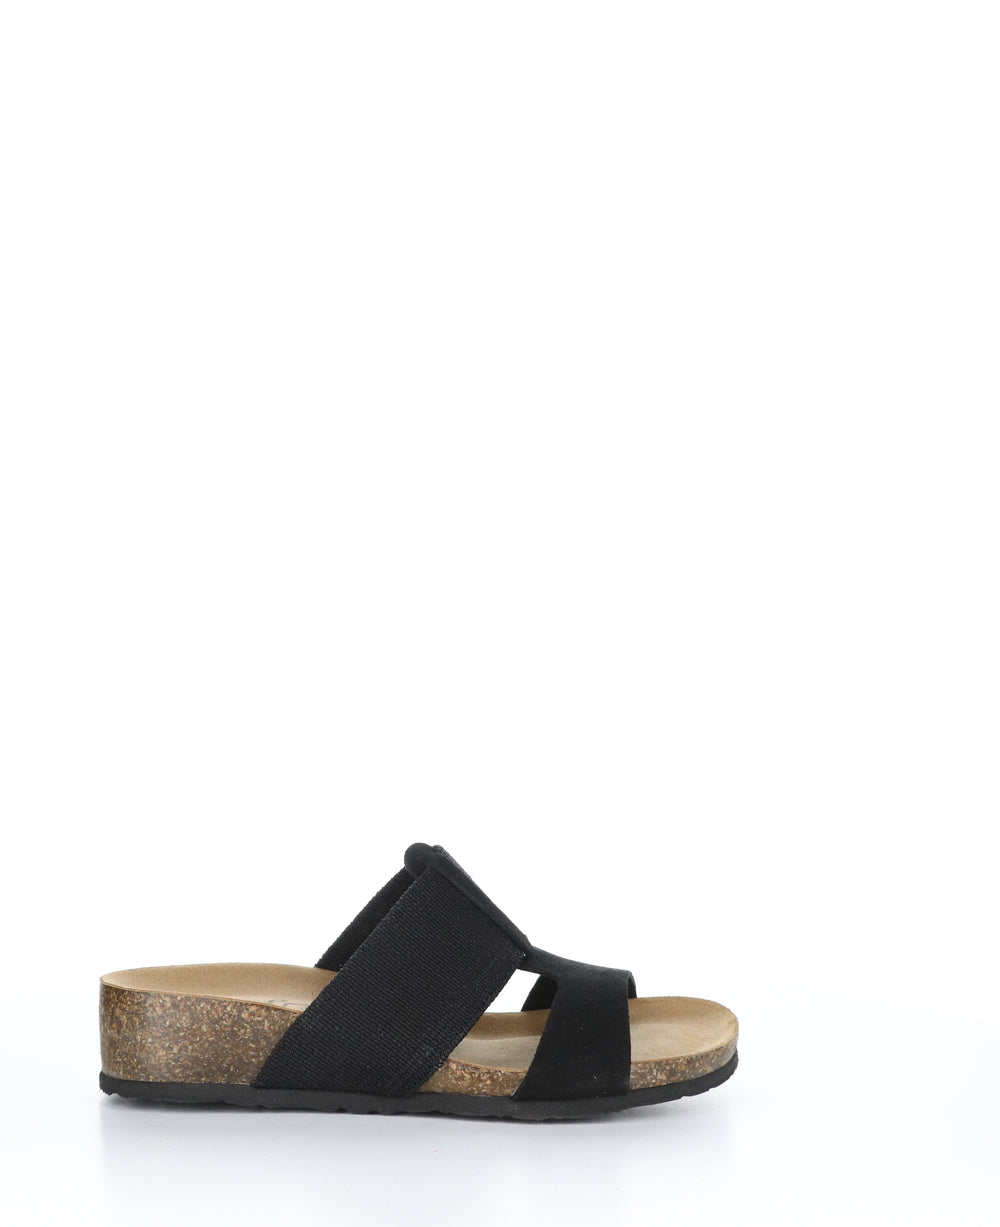 LULU BLACK Wedge Sandals